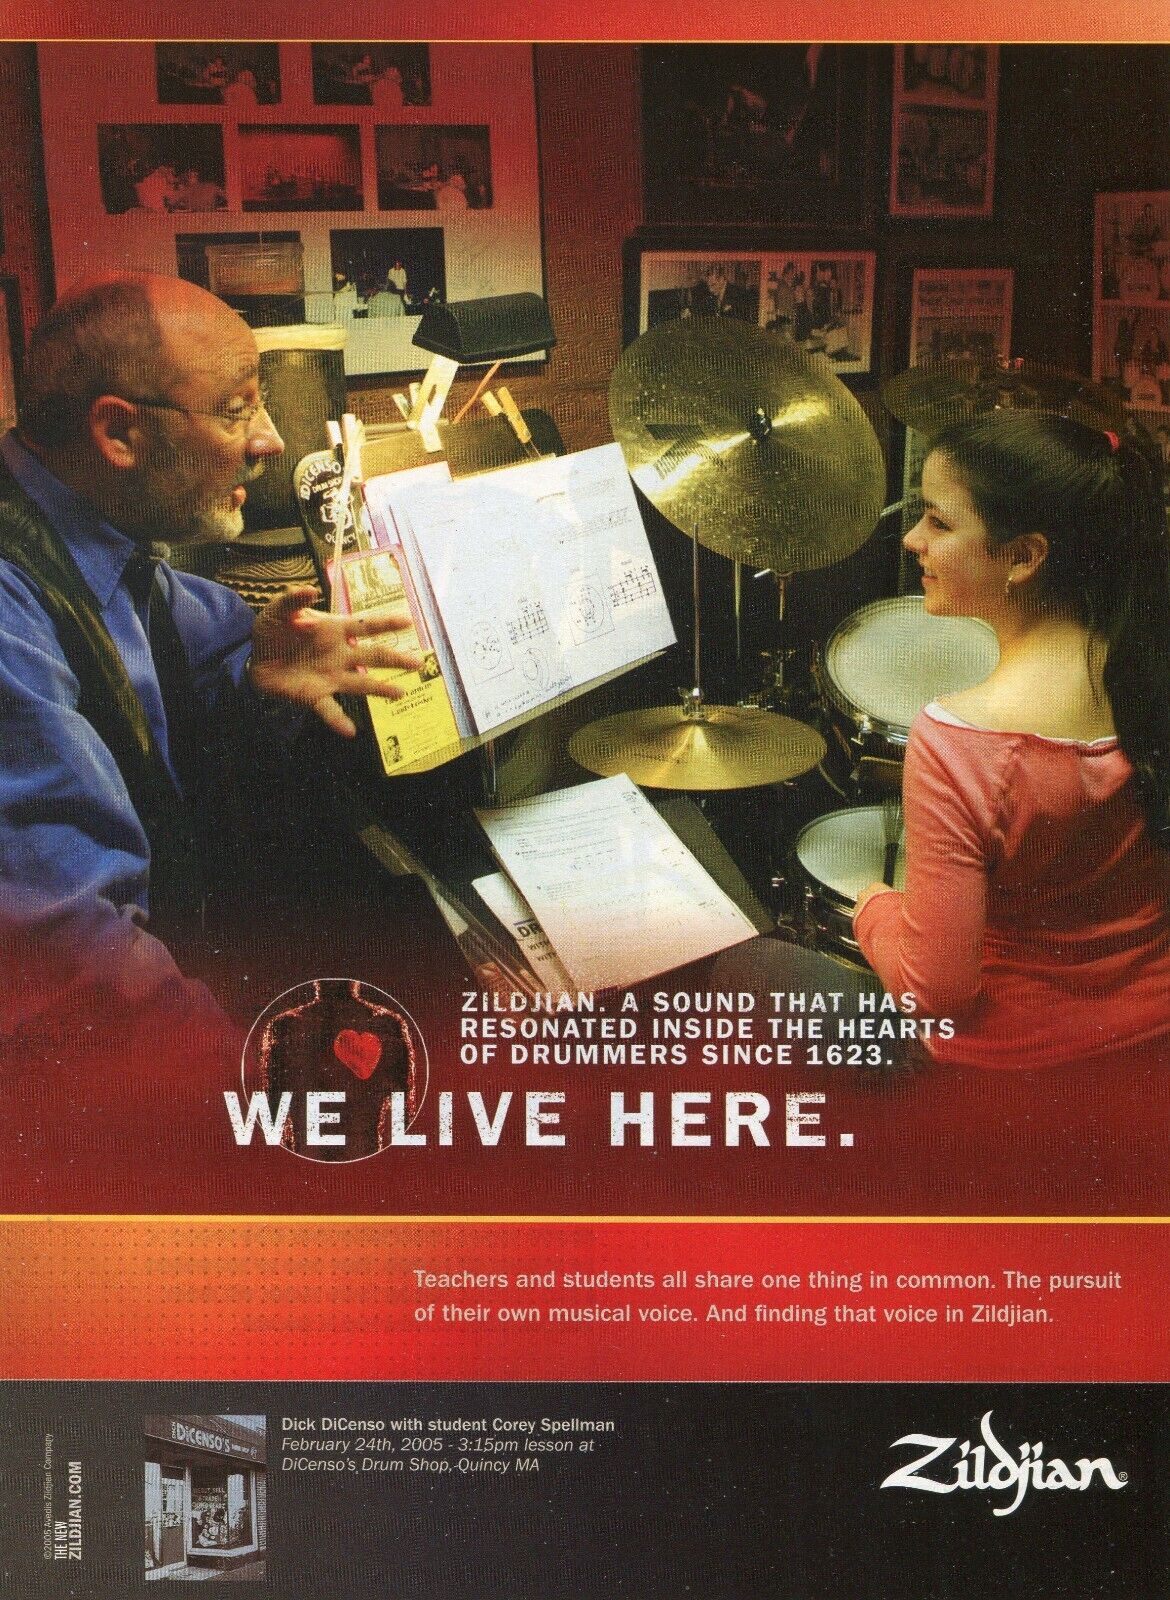 2005 Print Ad of Zildjian Drum Cymbals w Dick DiCenso Drum Shop & Corey Spellman